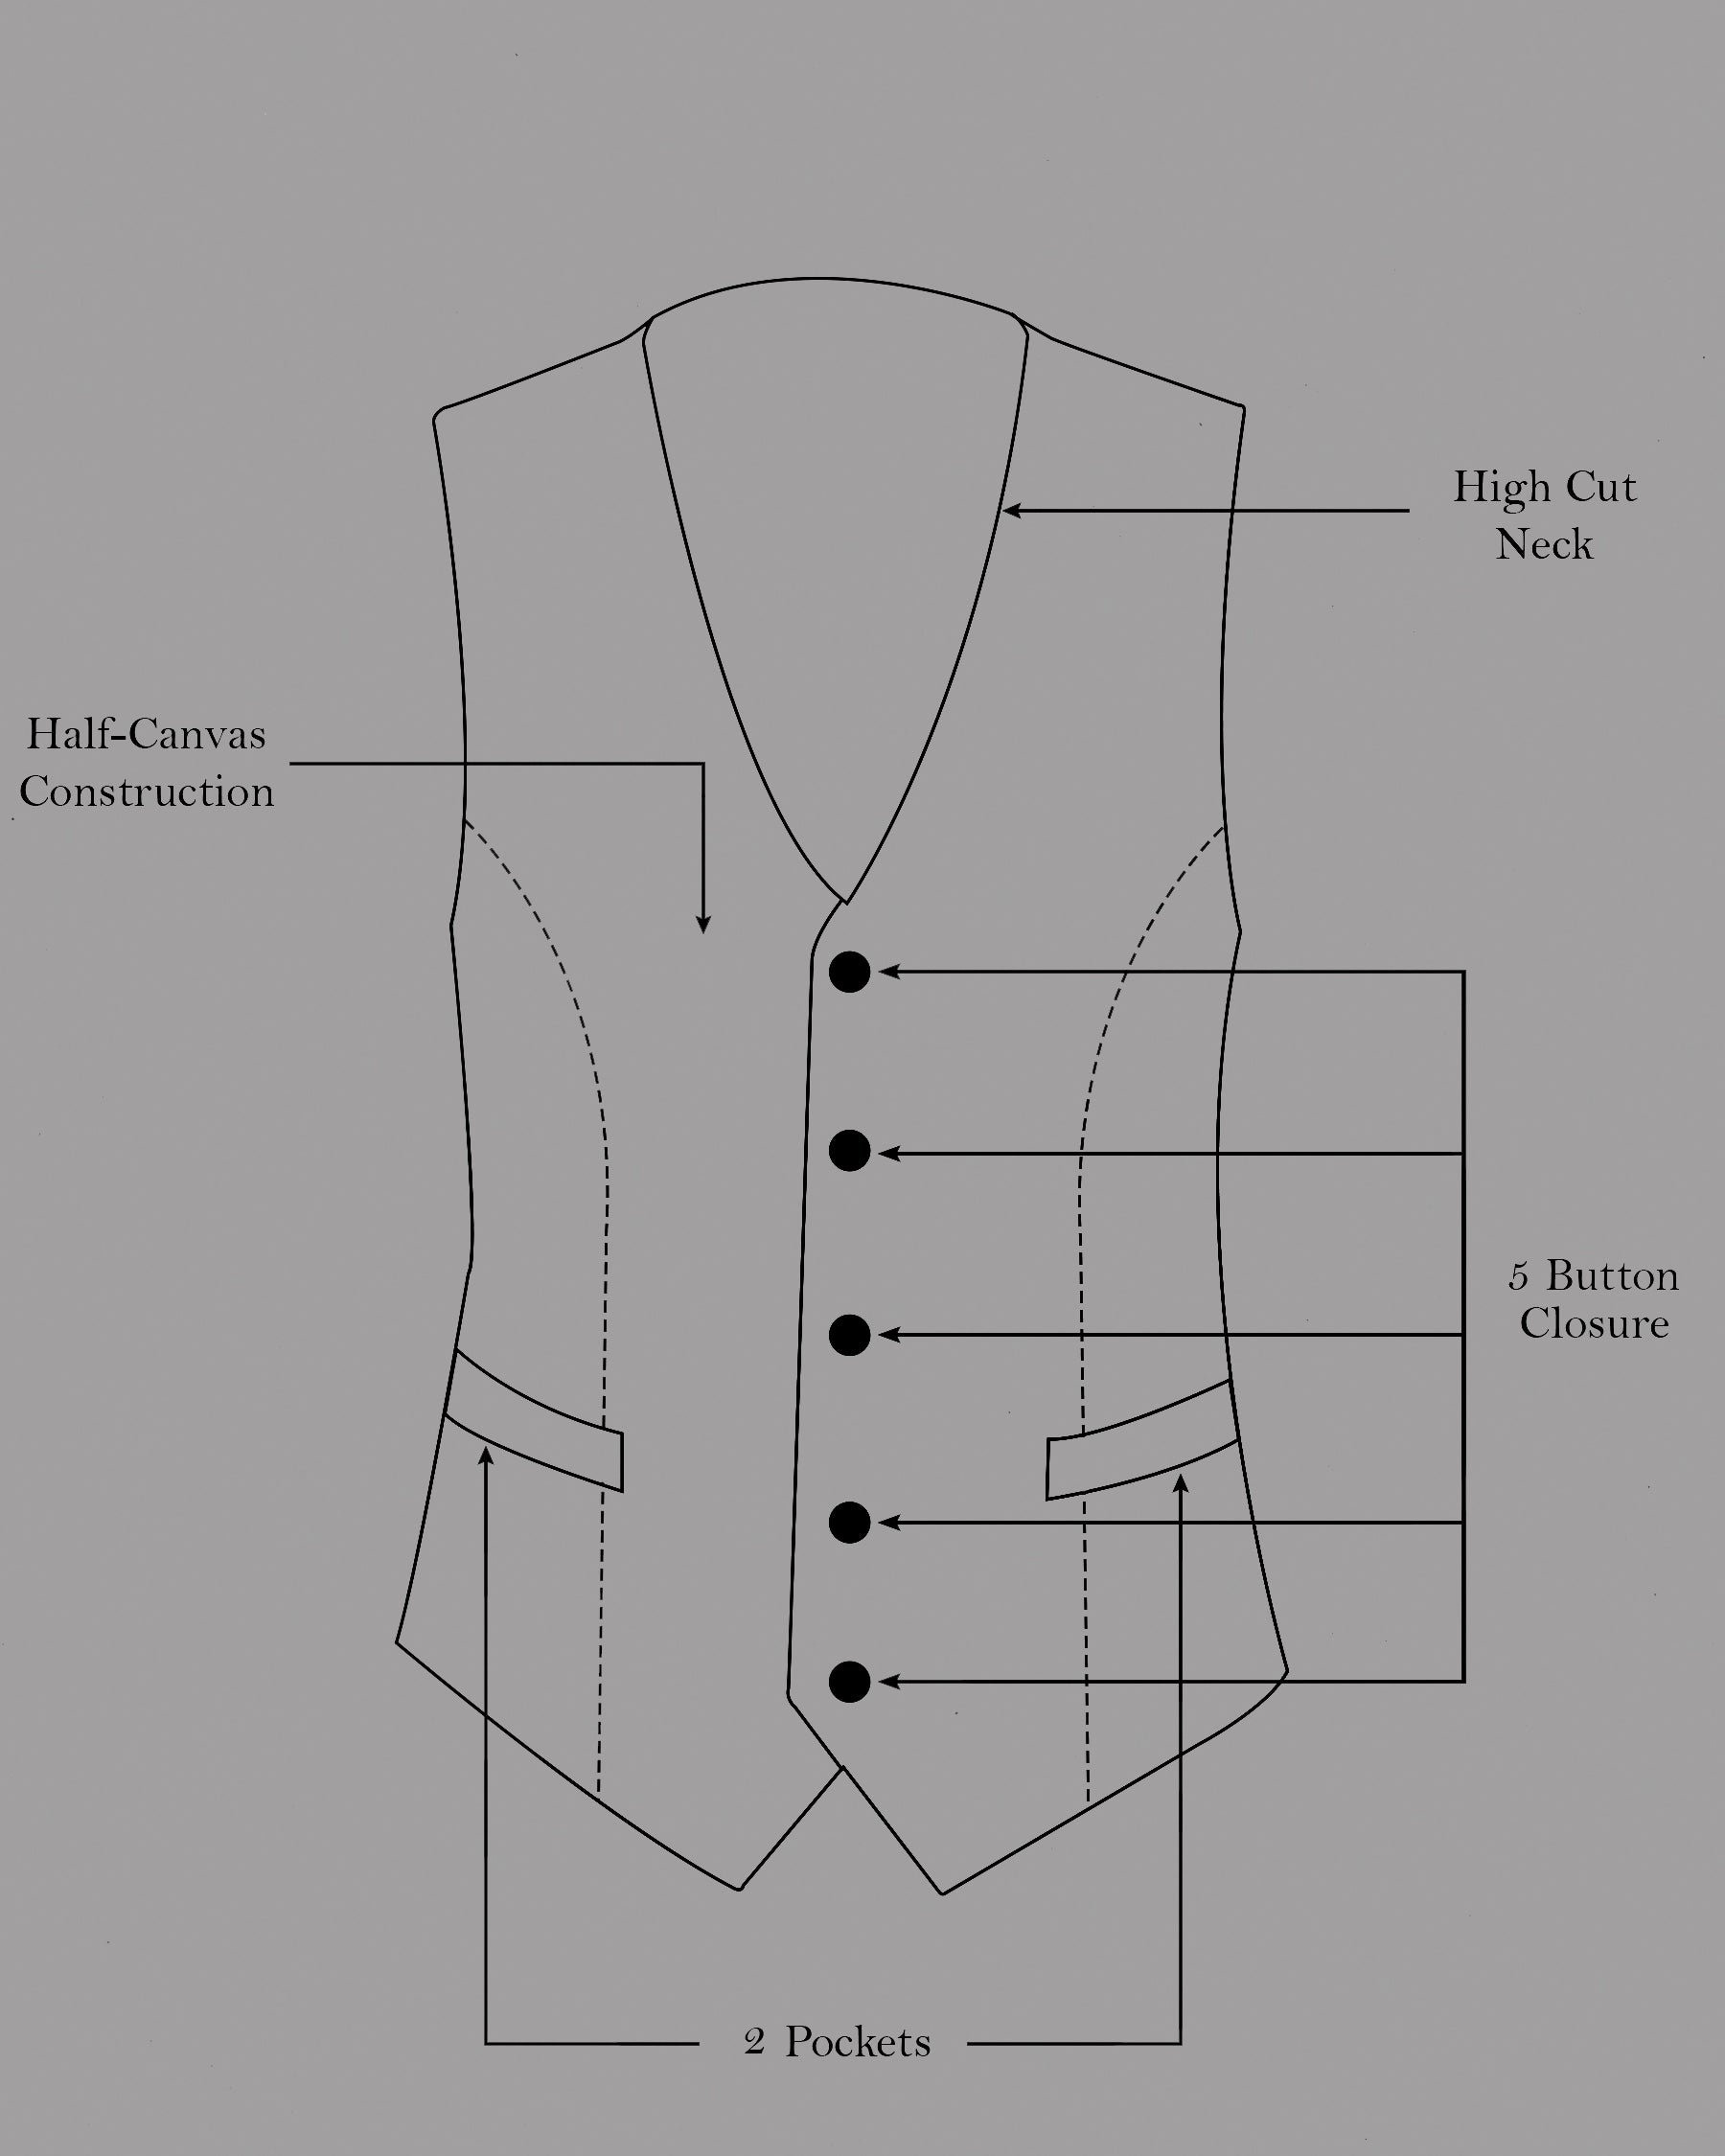 Khaki Brown Textured Waistcoat